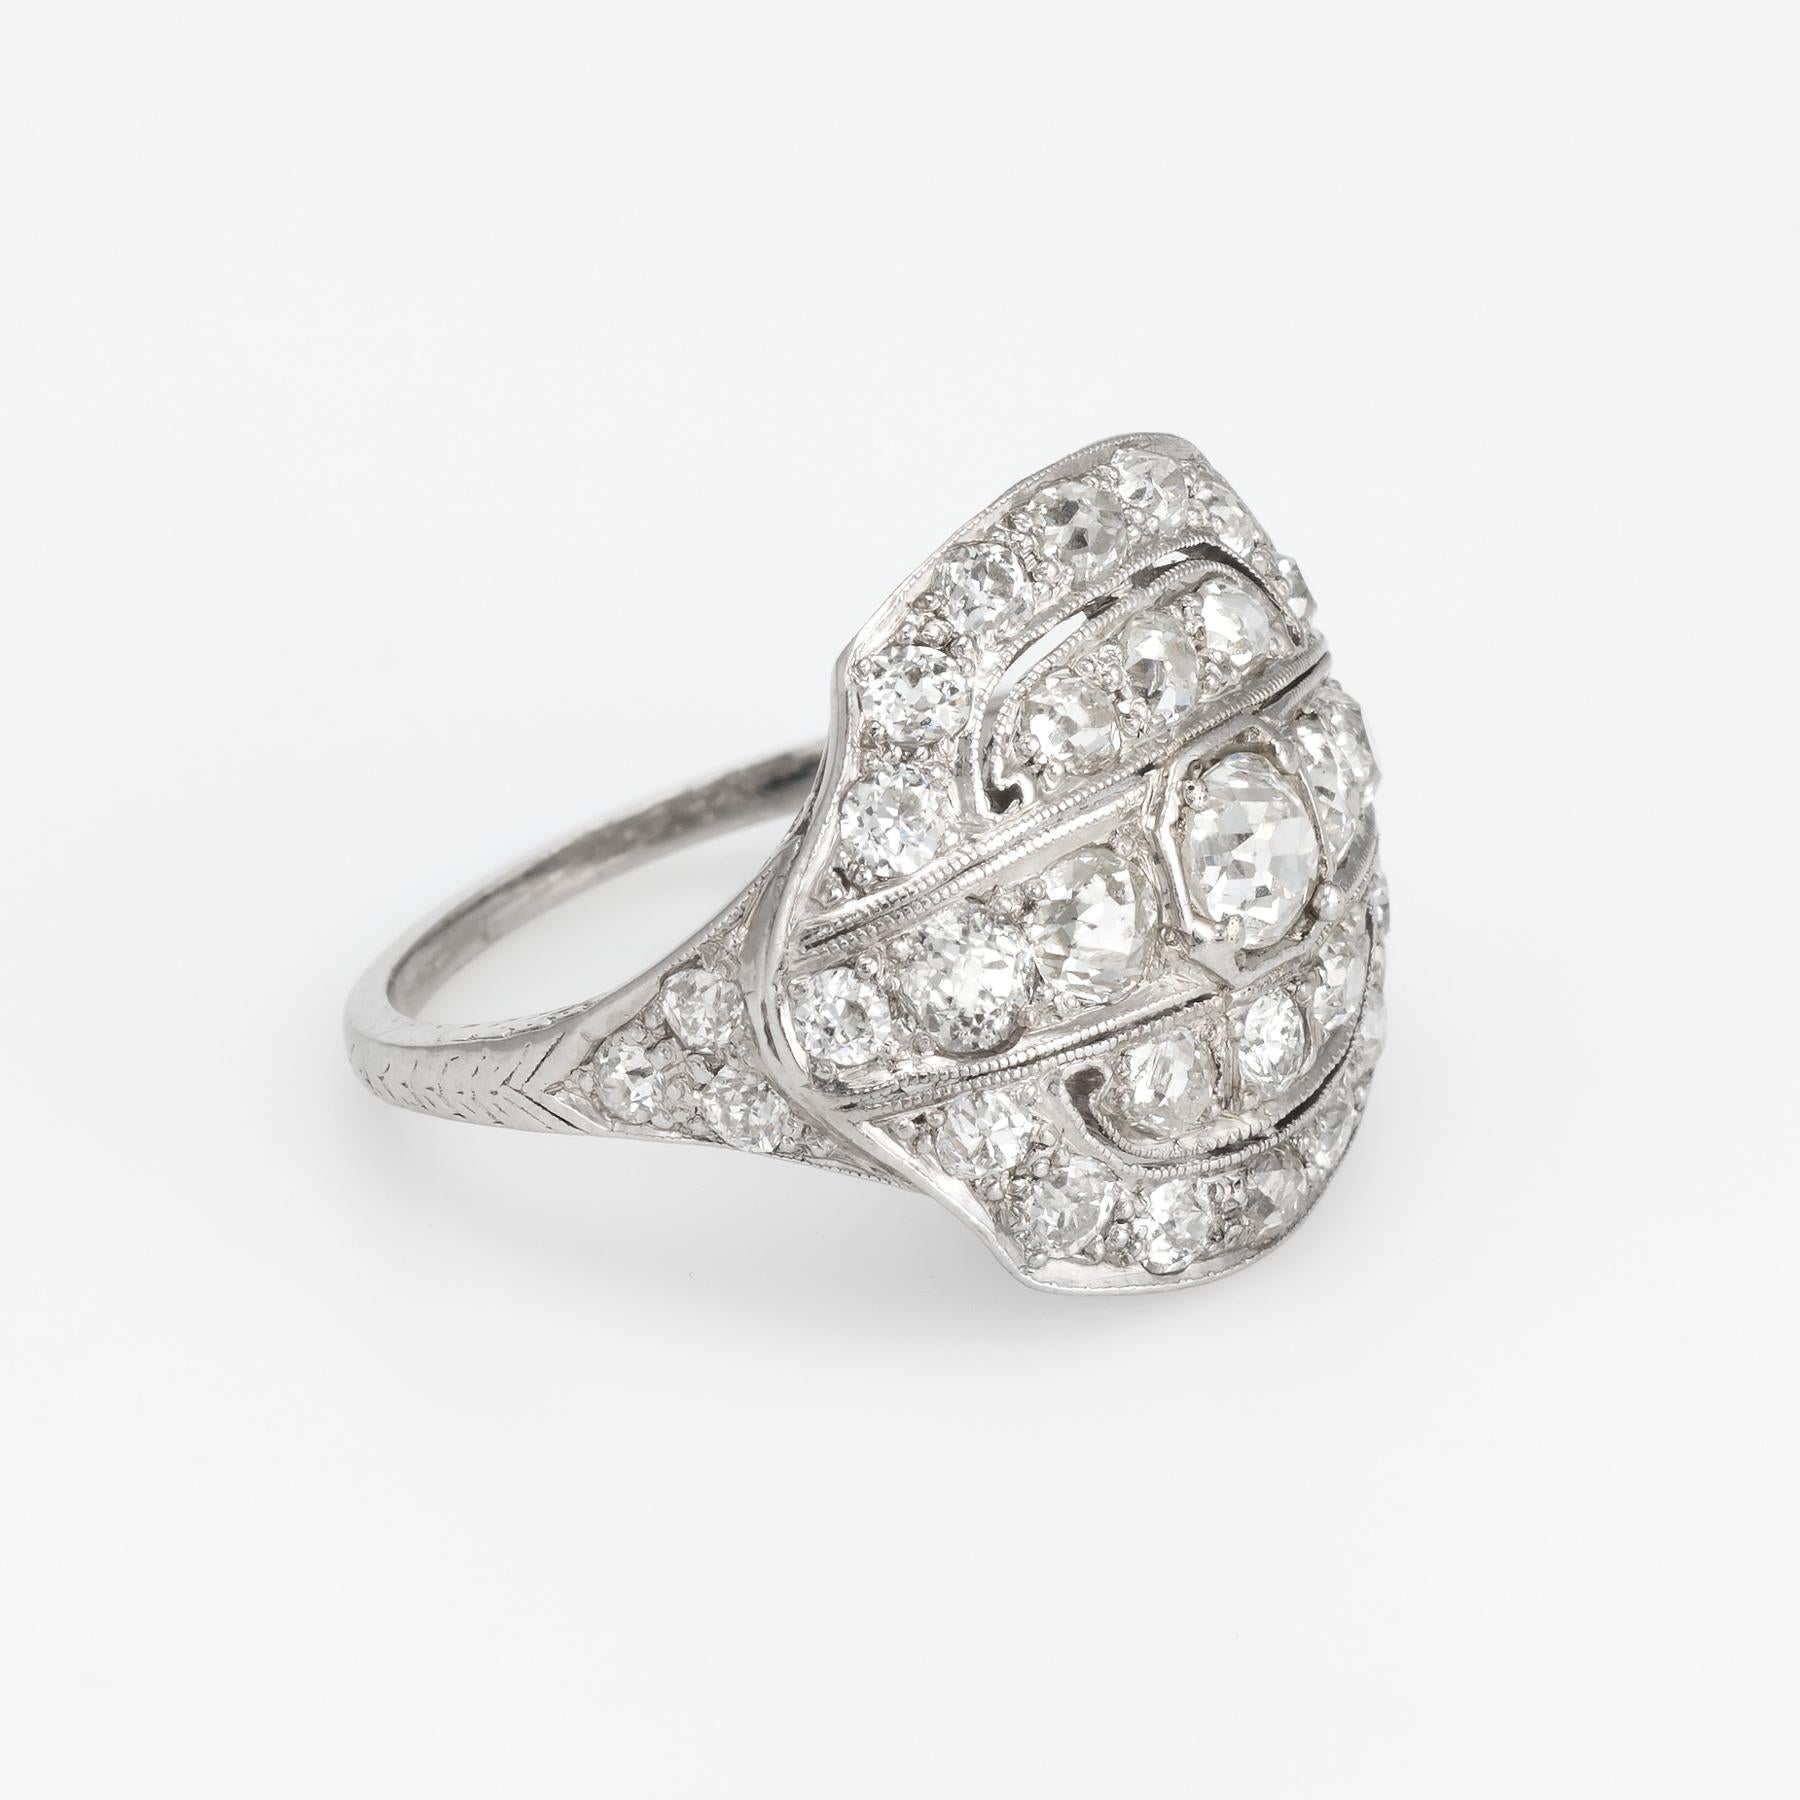 Art Deco Antique Deco Diamond Ring 2.25 Carat Platinum Vintage Fine Jewelry Heirloom